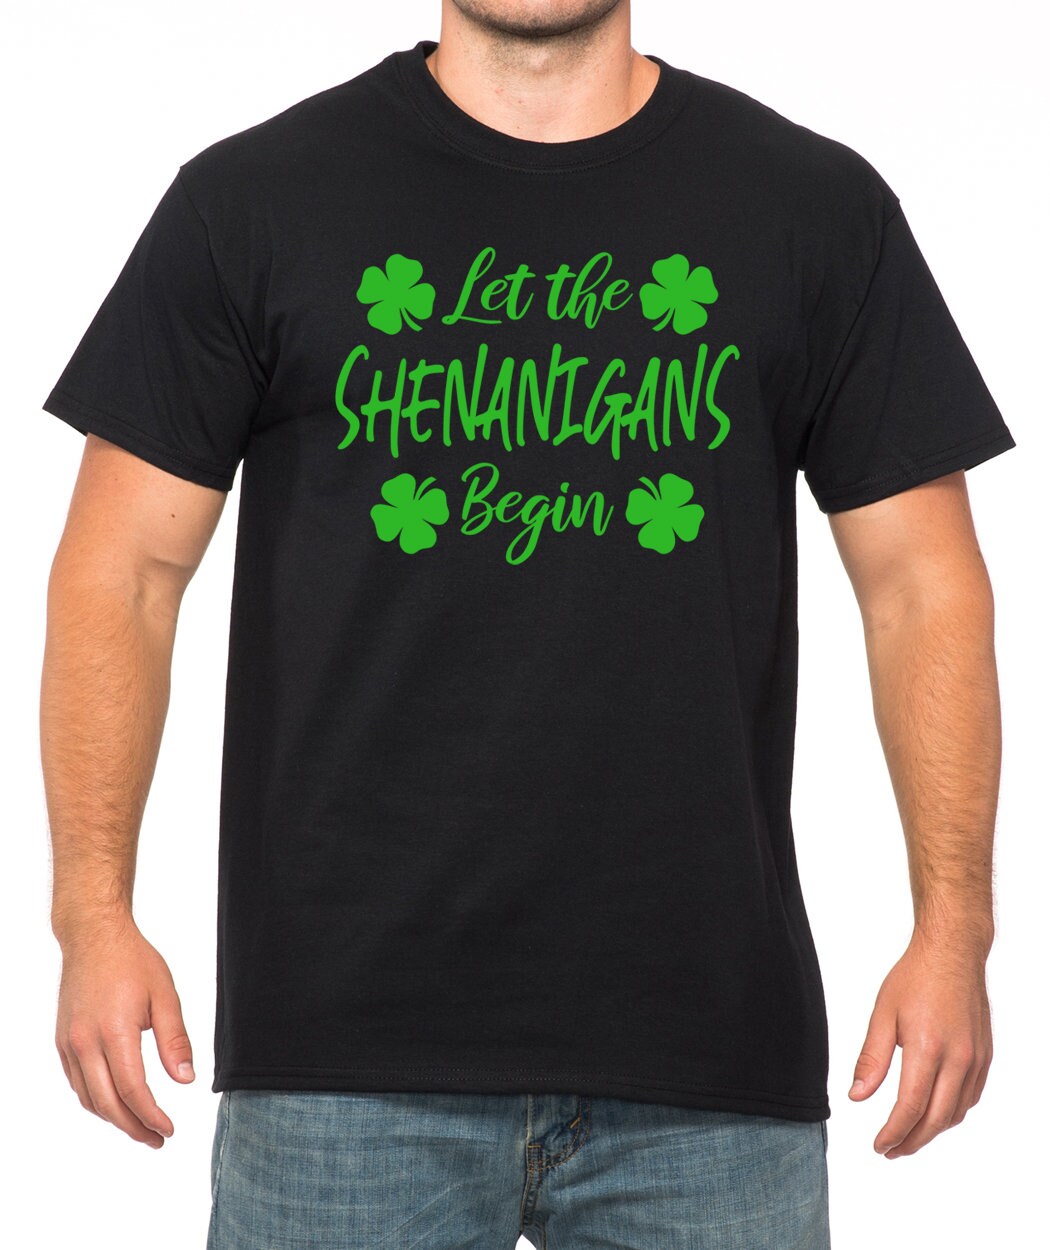 Let the Shenanigans begin T-shirt Shenanigan Enthusiast St | Etsy